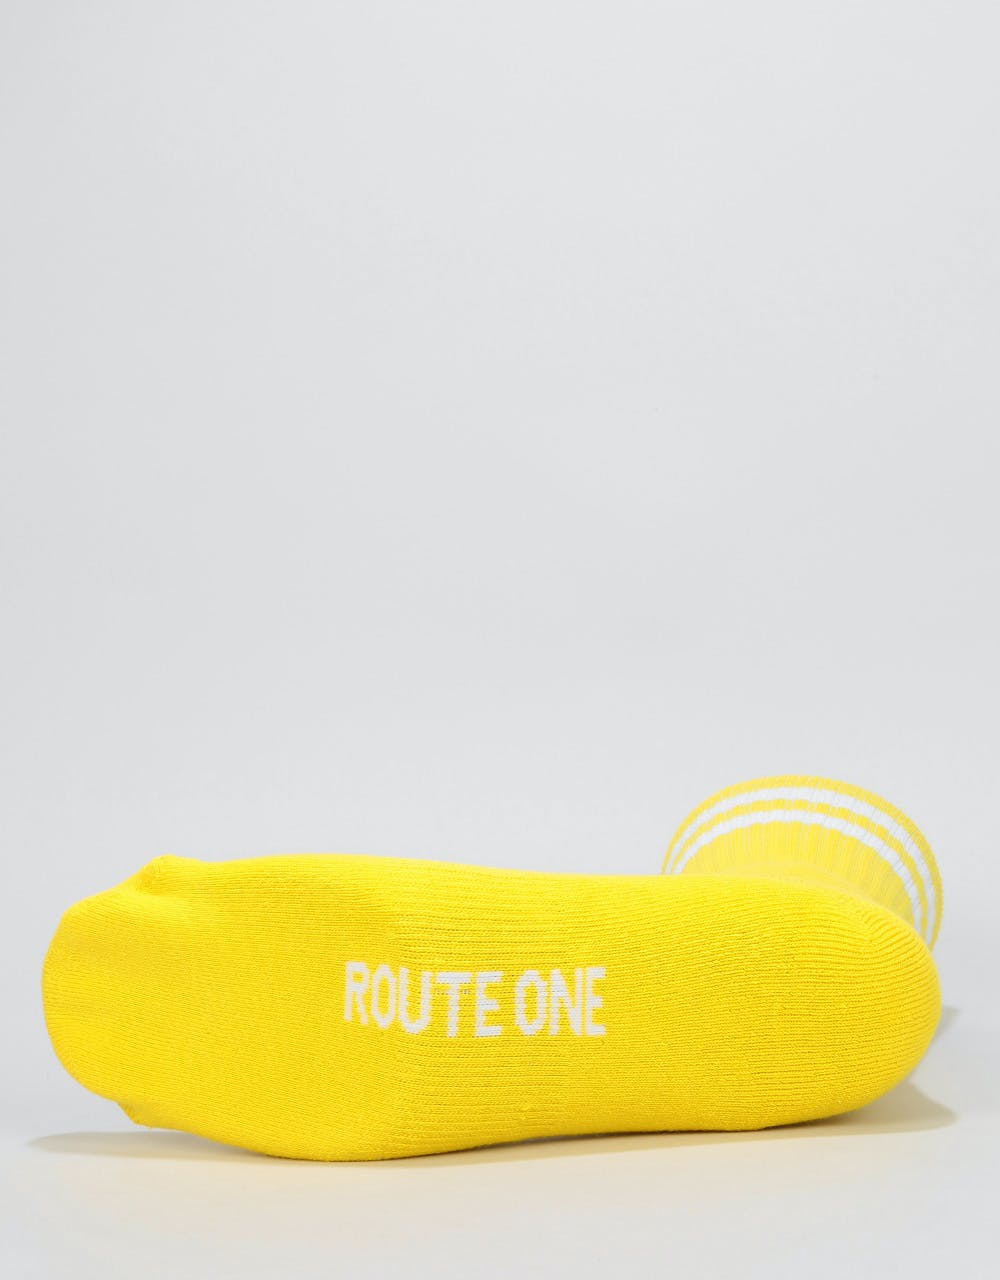 Route One Classic Crew Socks - Mustard/White